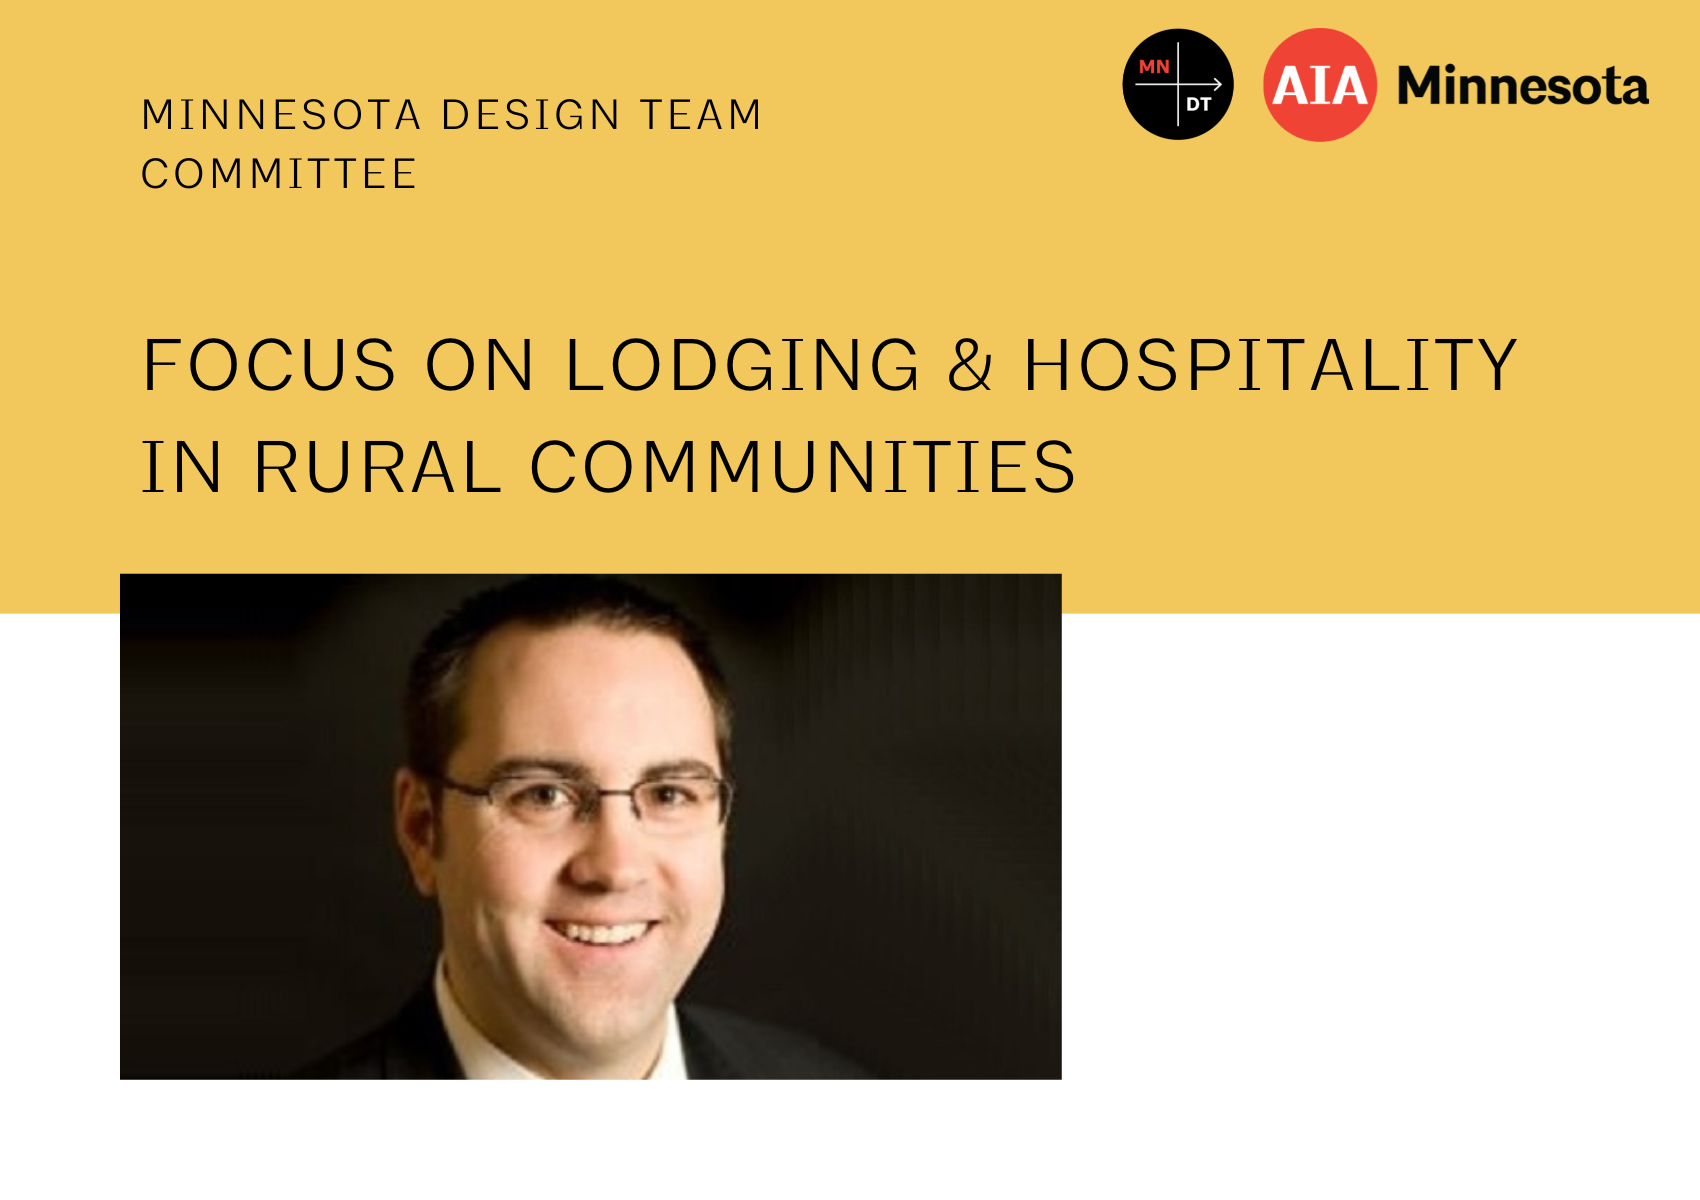 Minnesota Design Team Committee: Focus on Lodging & Hospitality in Rural Communities